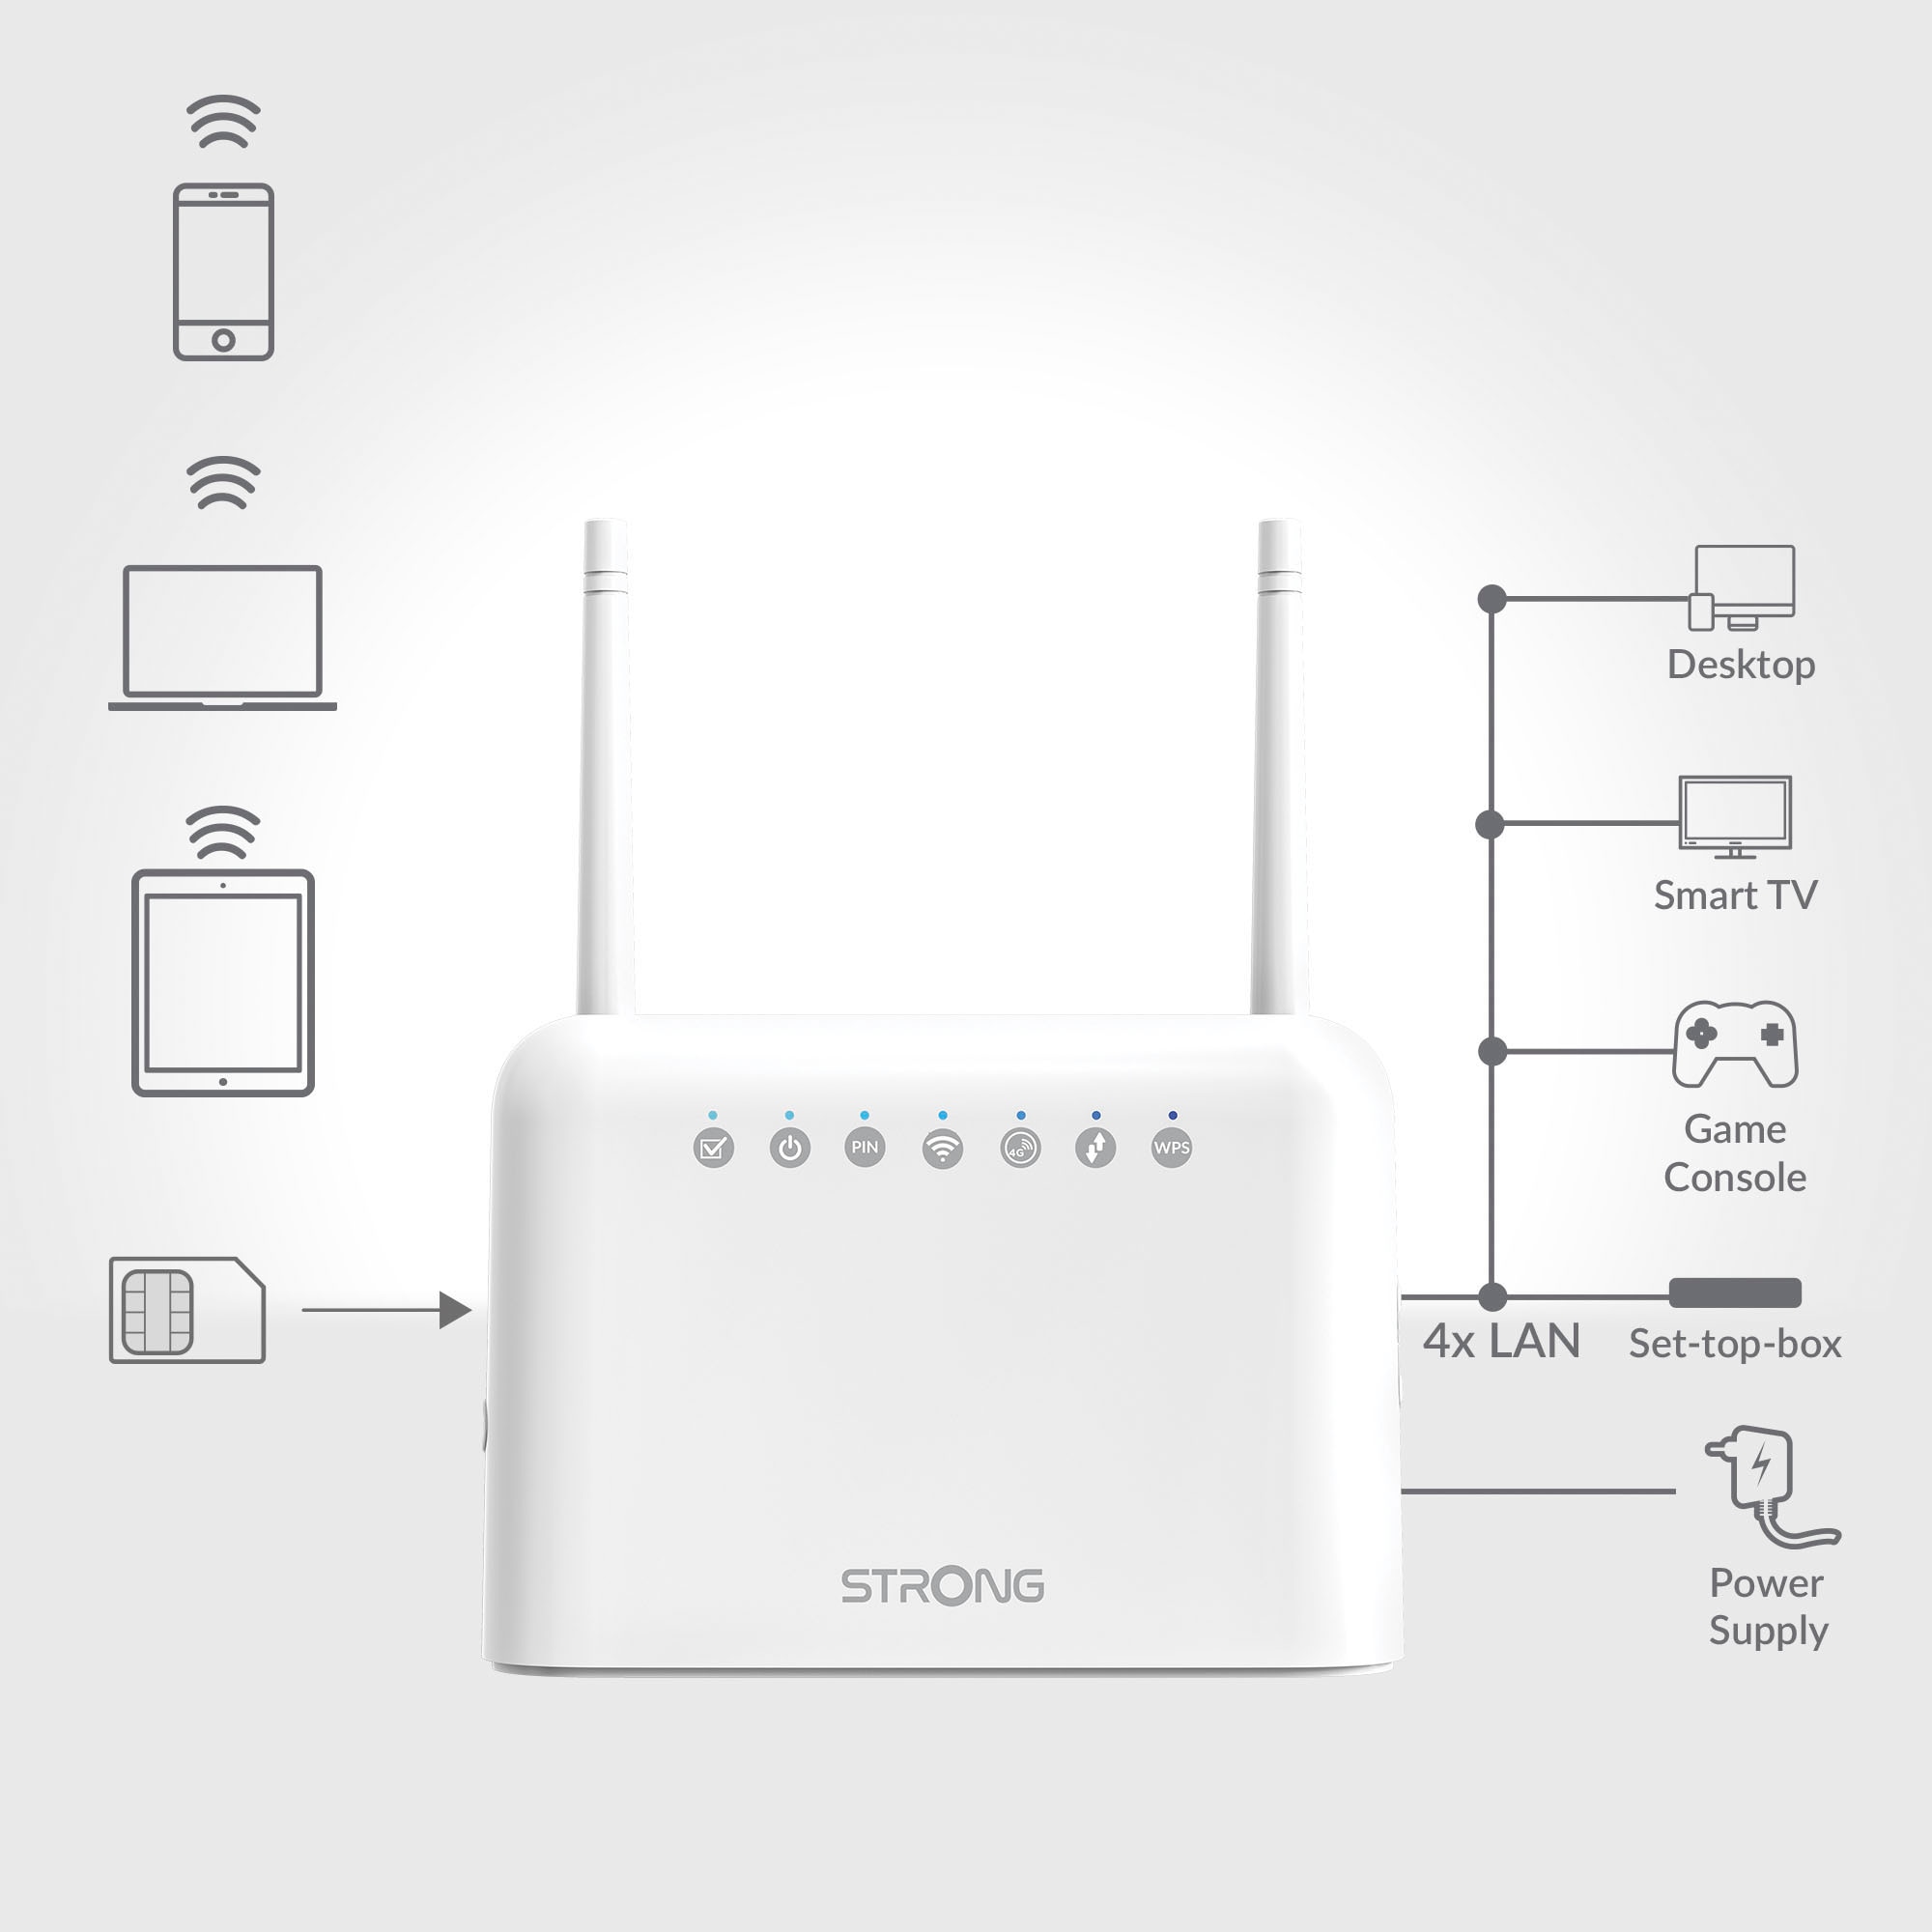 Strong 4G/LTE-Router »350, LTE bis 150 Mbit/s, WLAN bis 300 Mbit/s«